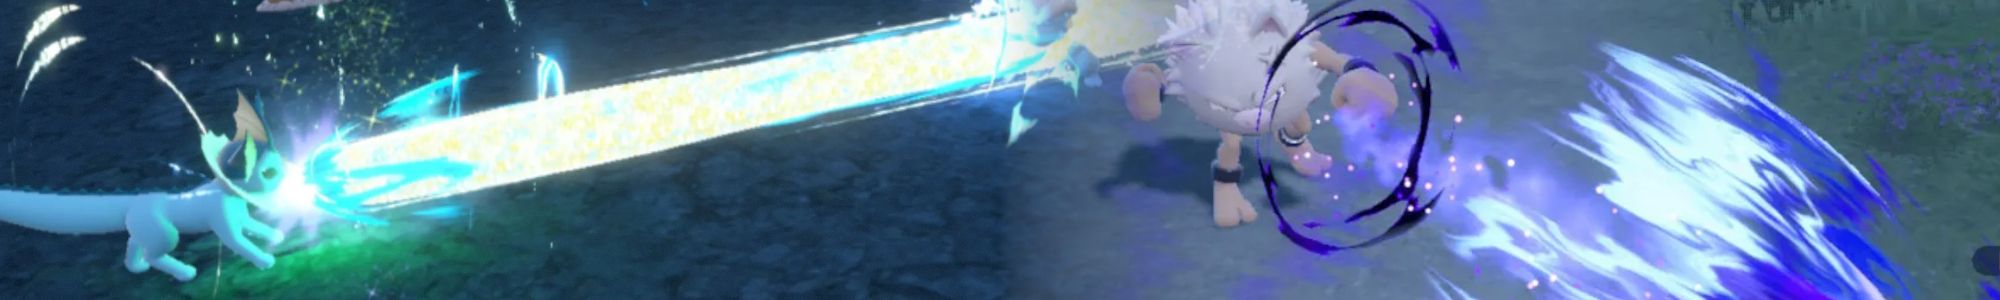 Split image of Vaporeon using Tera Blast and Annihilape using Rage Fist in Pokemon Scarlet & Violet.